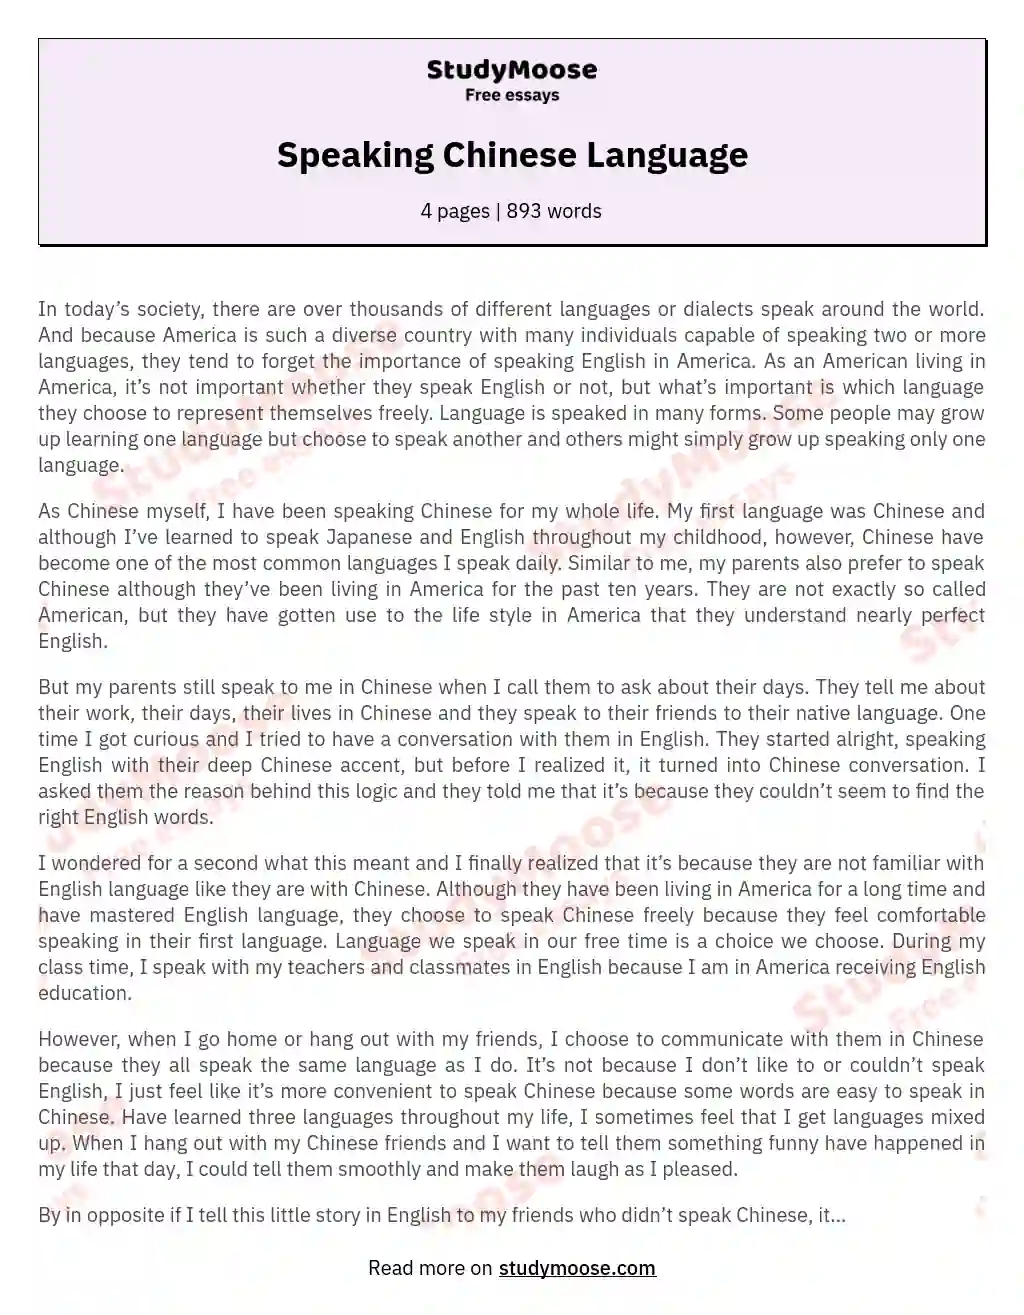 Speaking Chinese Language essay